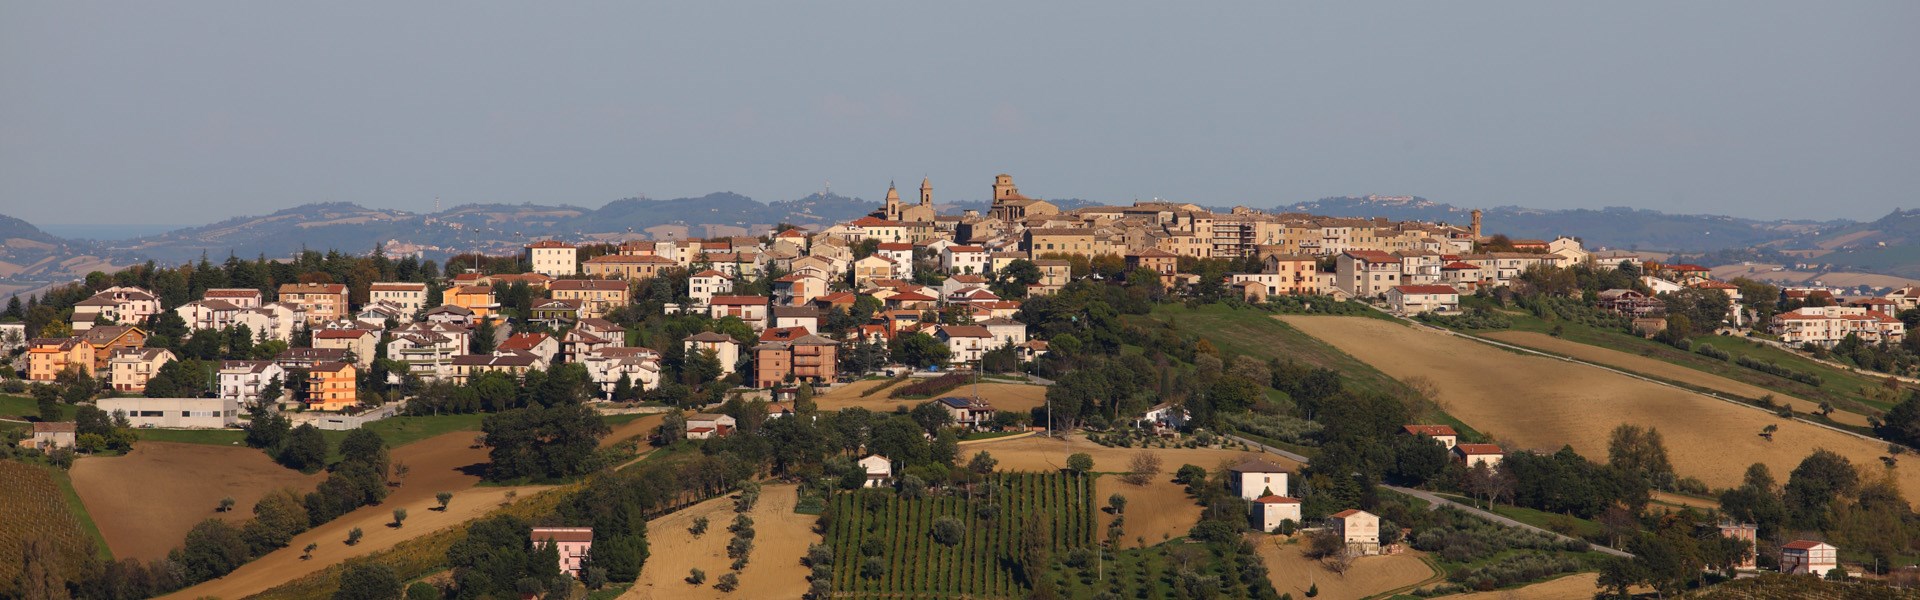 Staffolo - Panorama